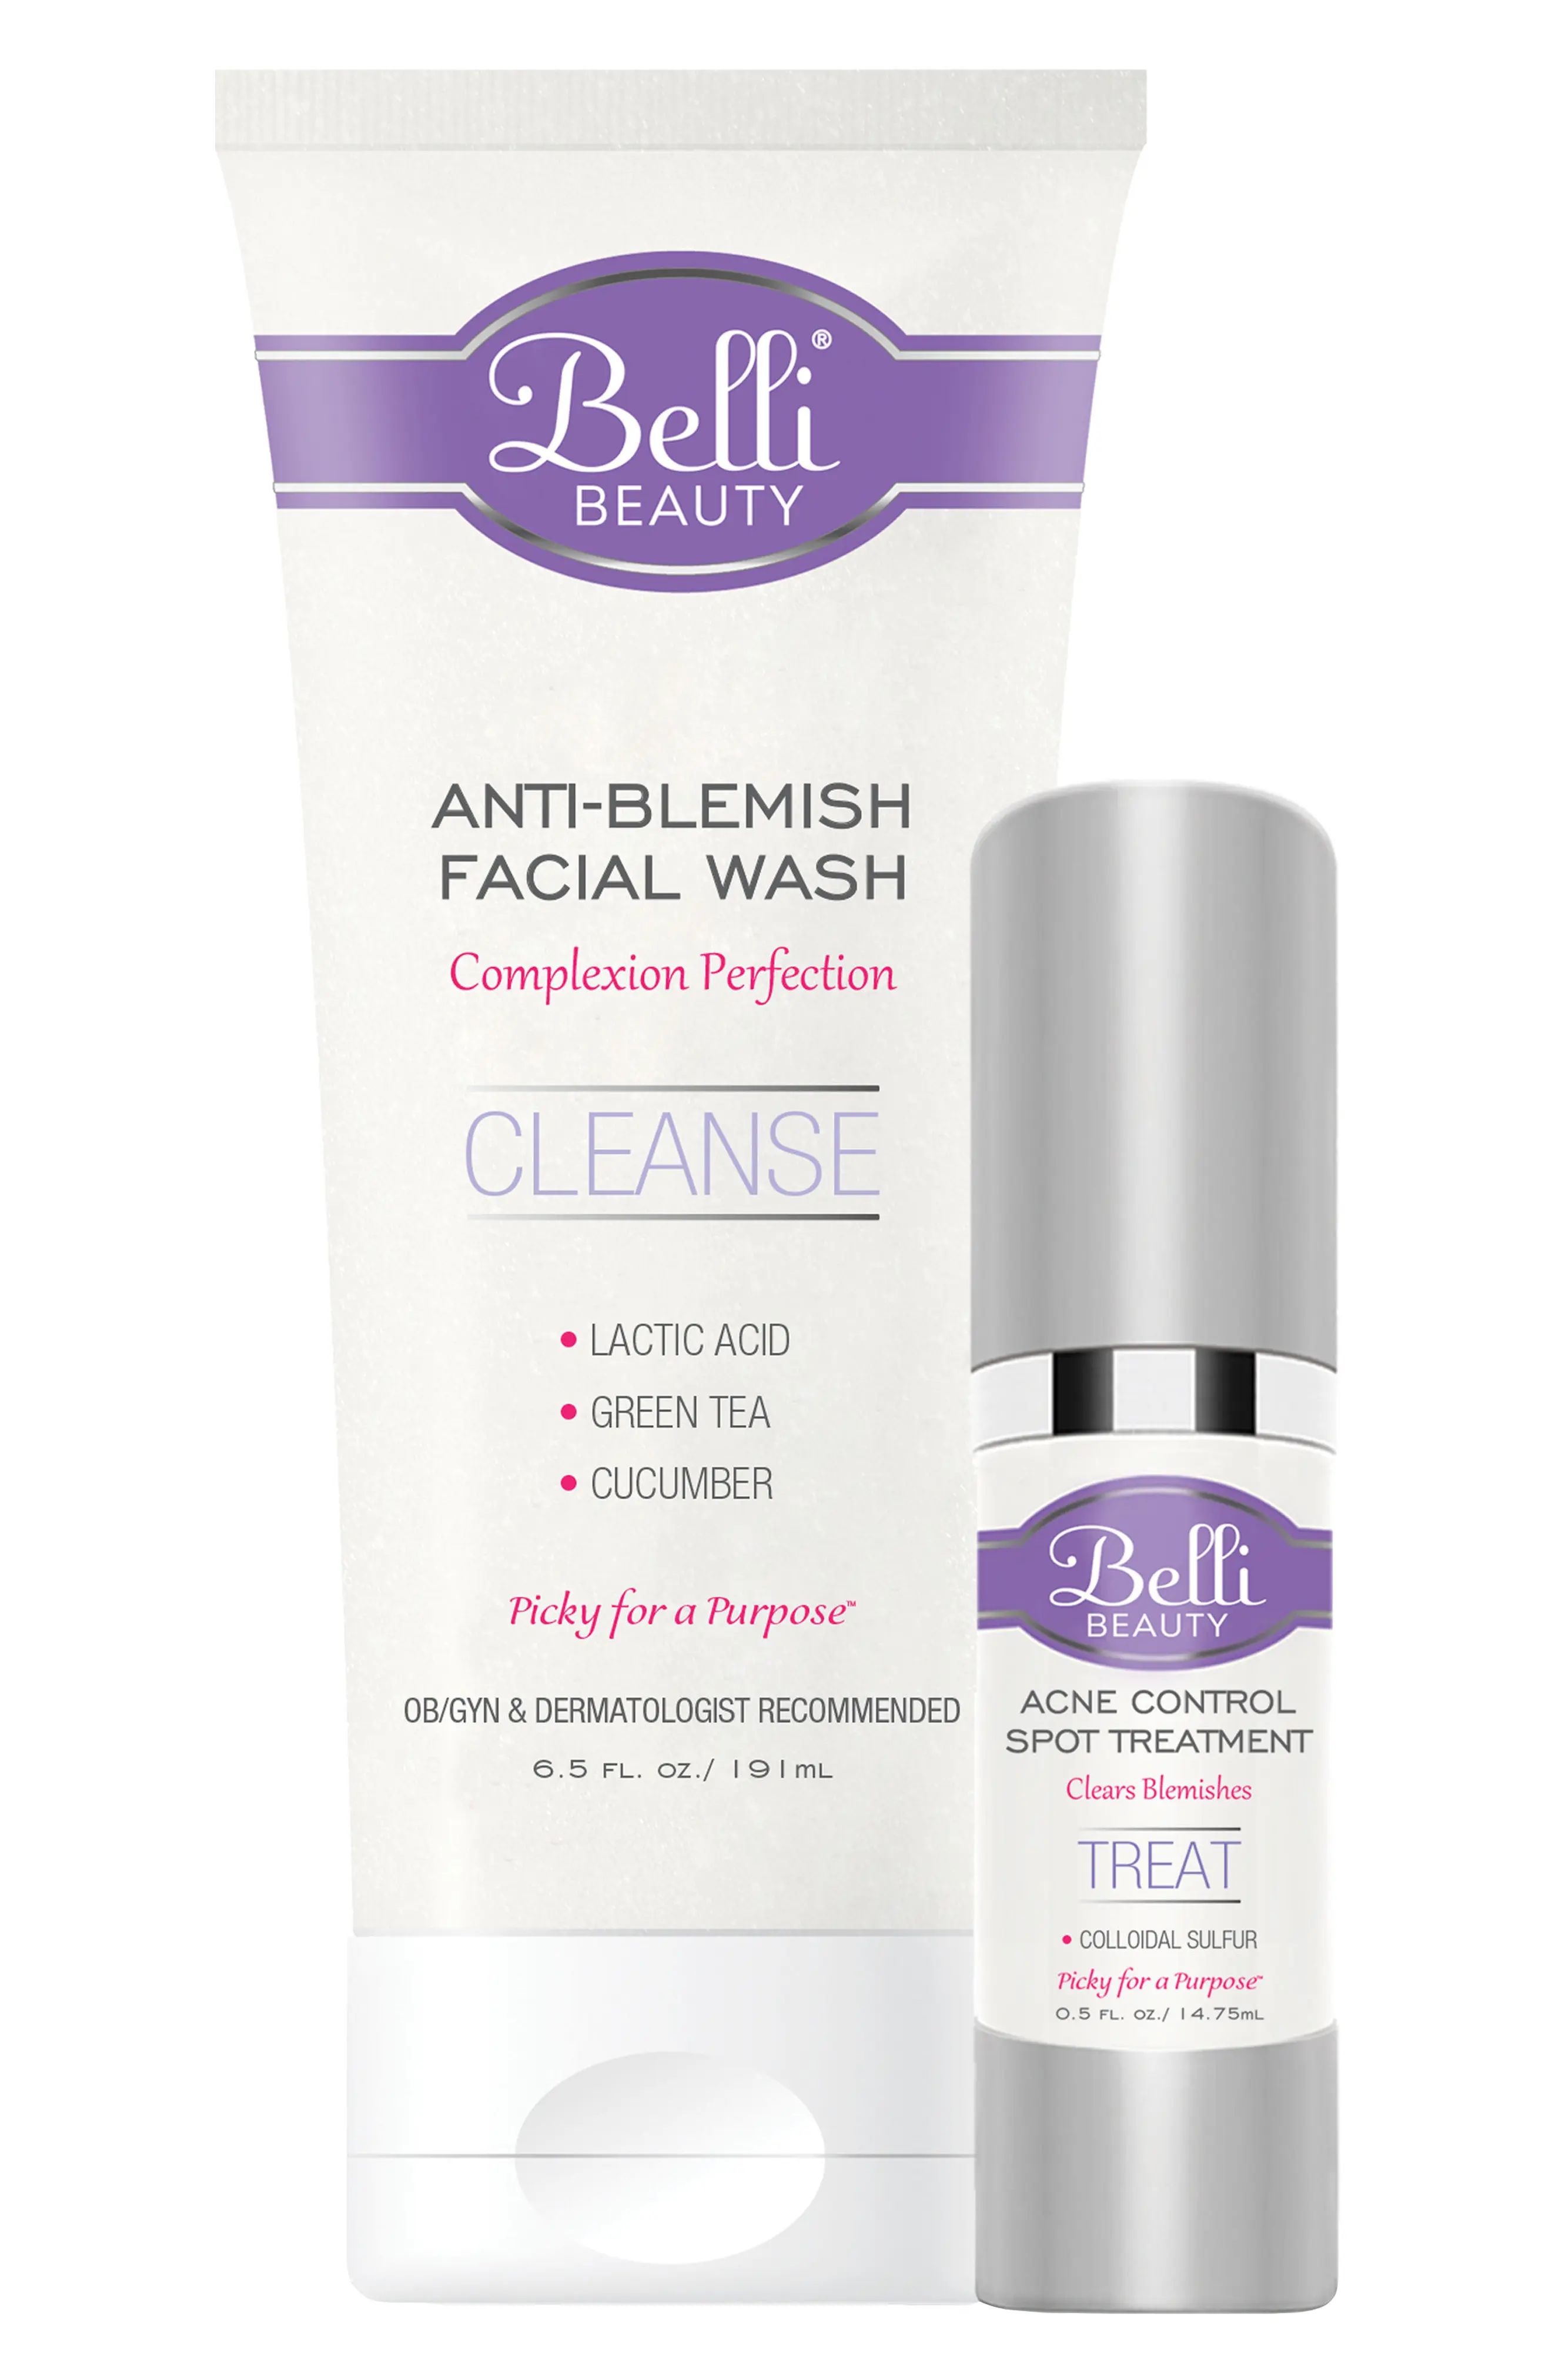 Anti-Blemish Basics with Anti-Blemish Facial Wash (6.5 oz.) & Acne Control Spot Treatment | Nordstrom